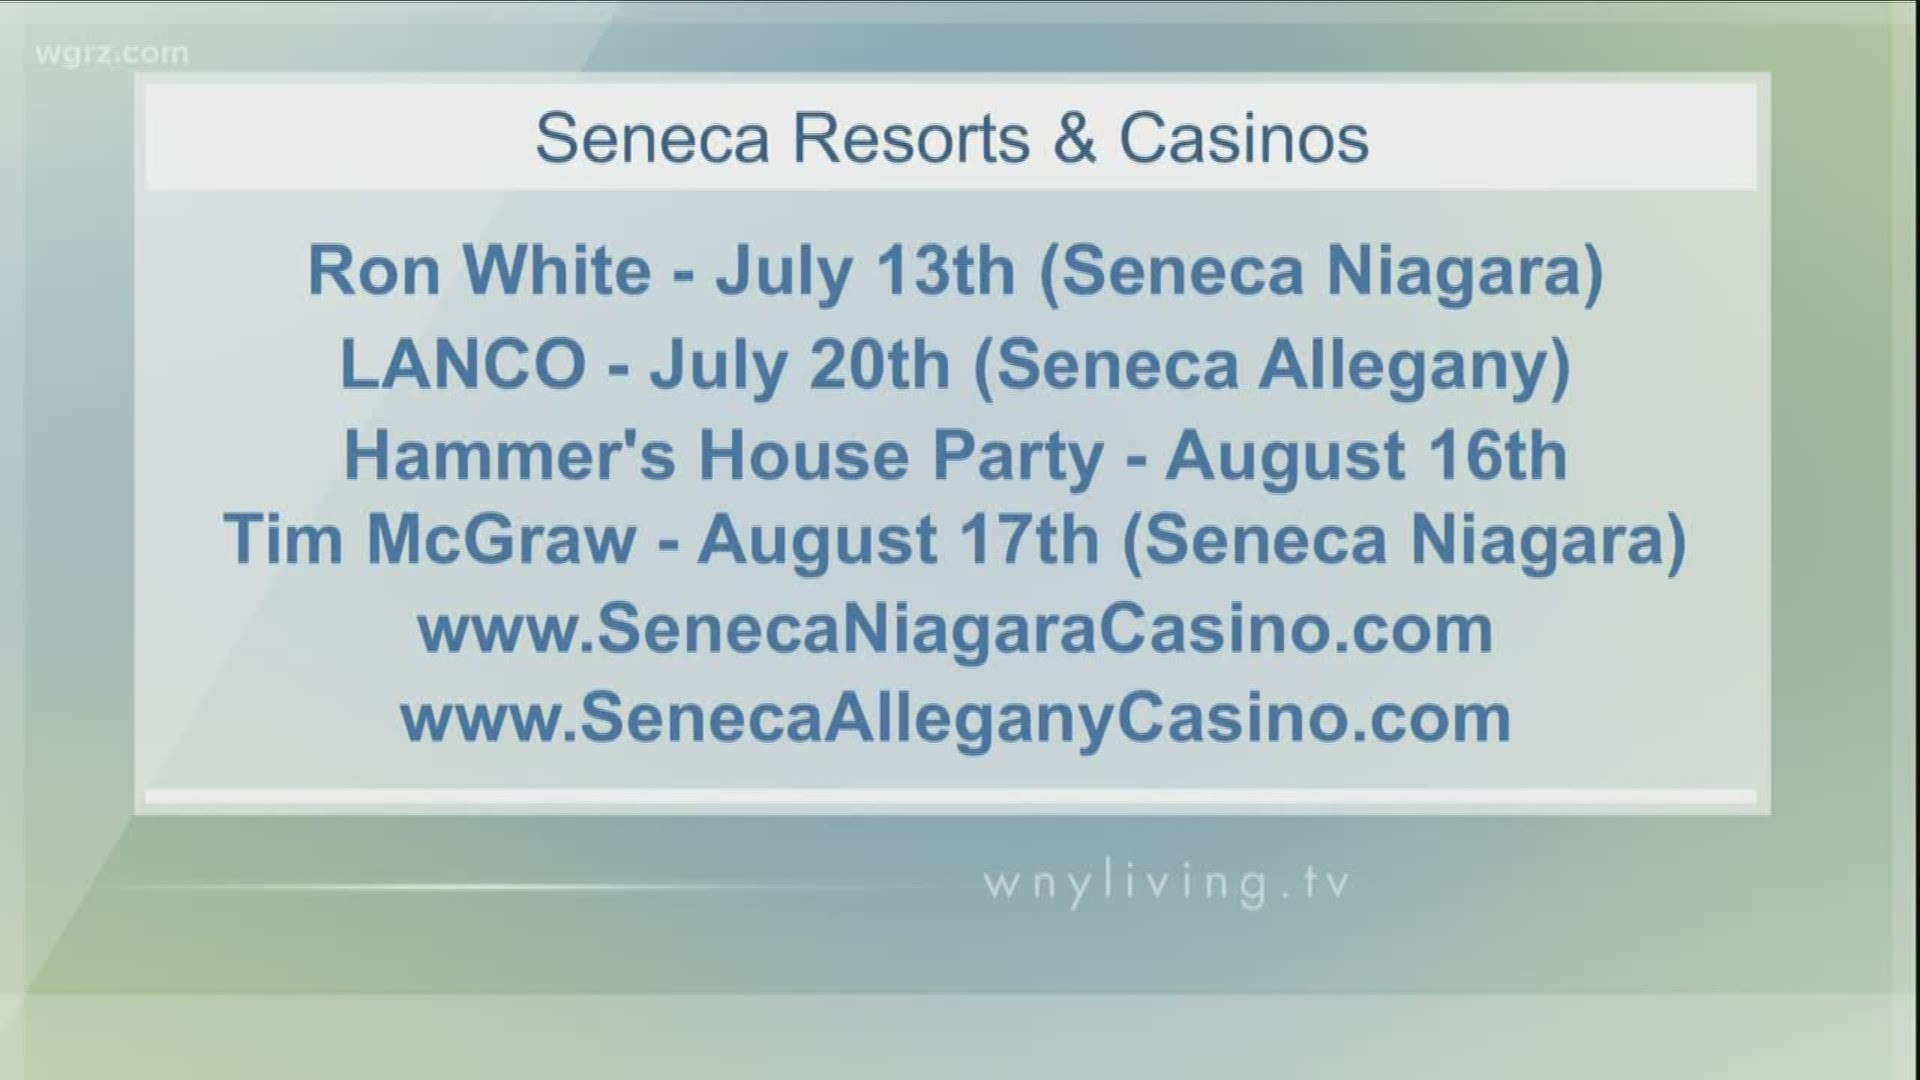 WNY Living - July 6 - Seneca Resorts & Casinos (SPONSORED CONTENT)